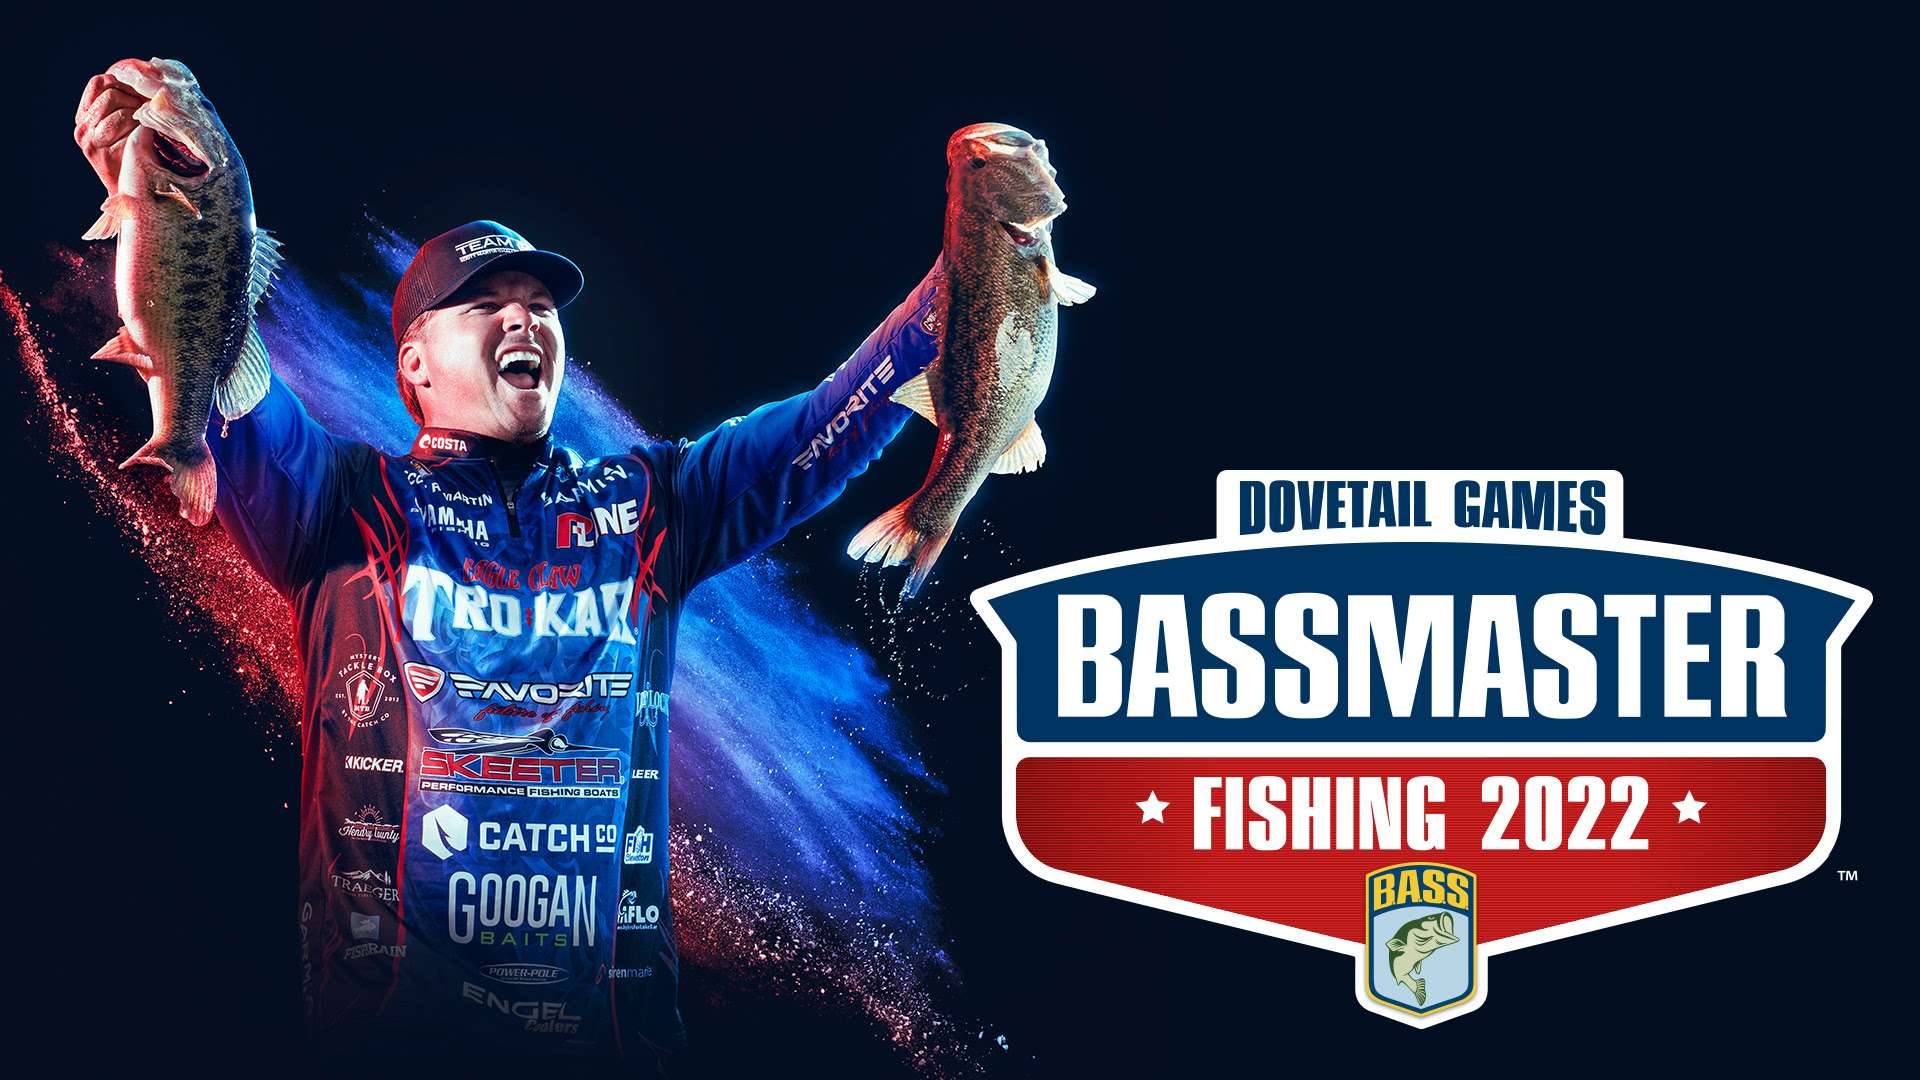 Bassmaster Fishing 2022 Video Game casts off today - Bassmaster